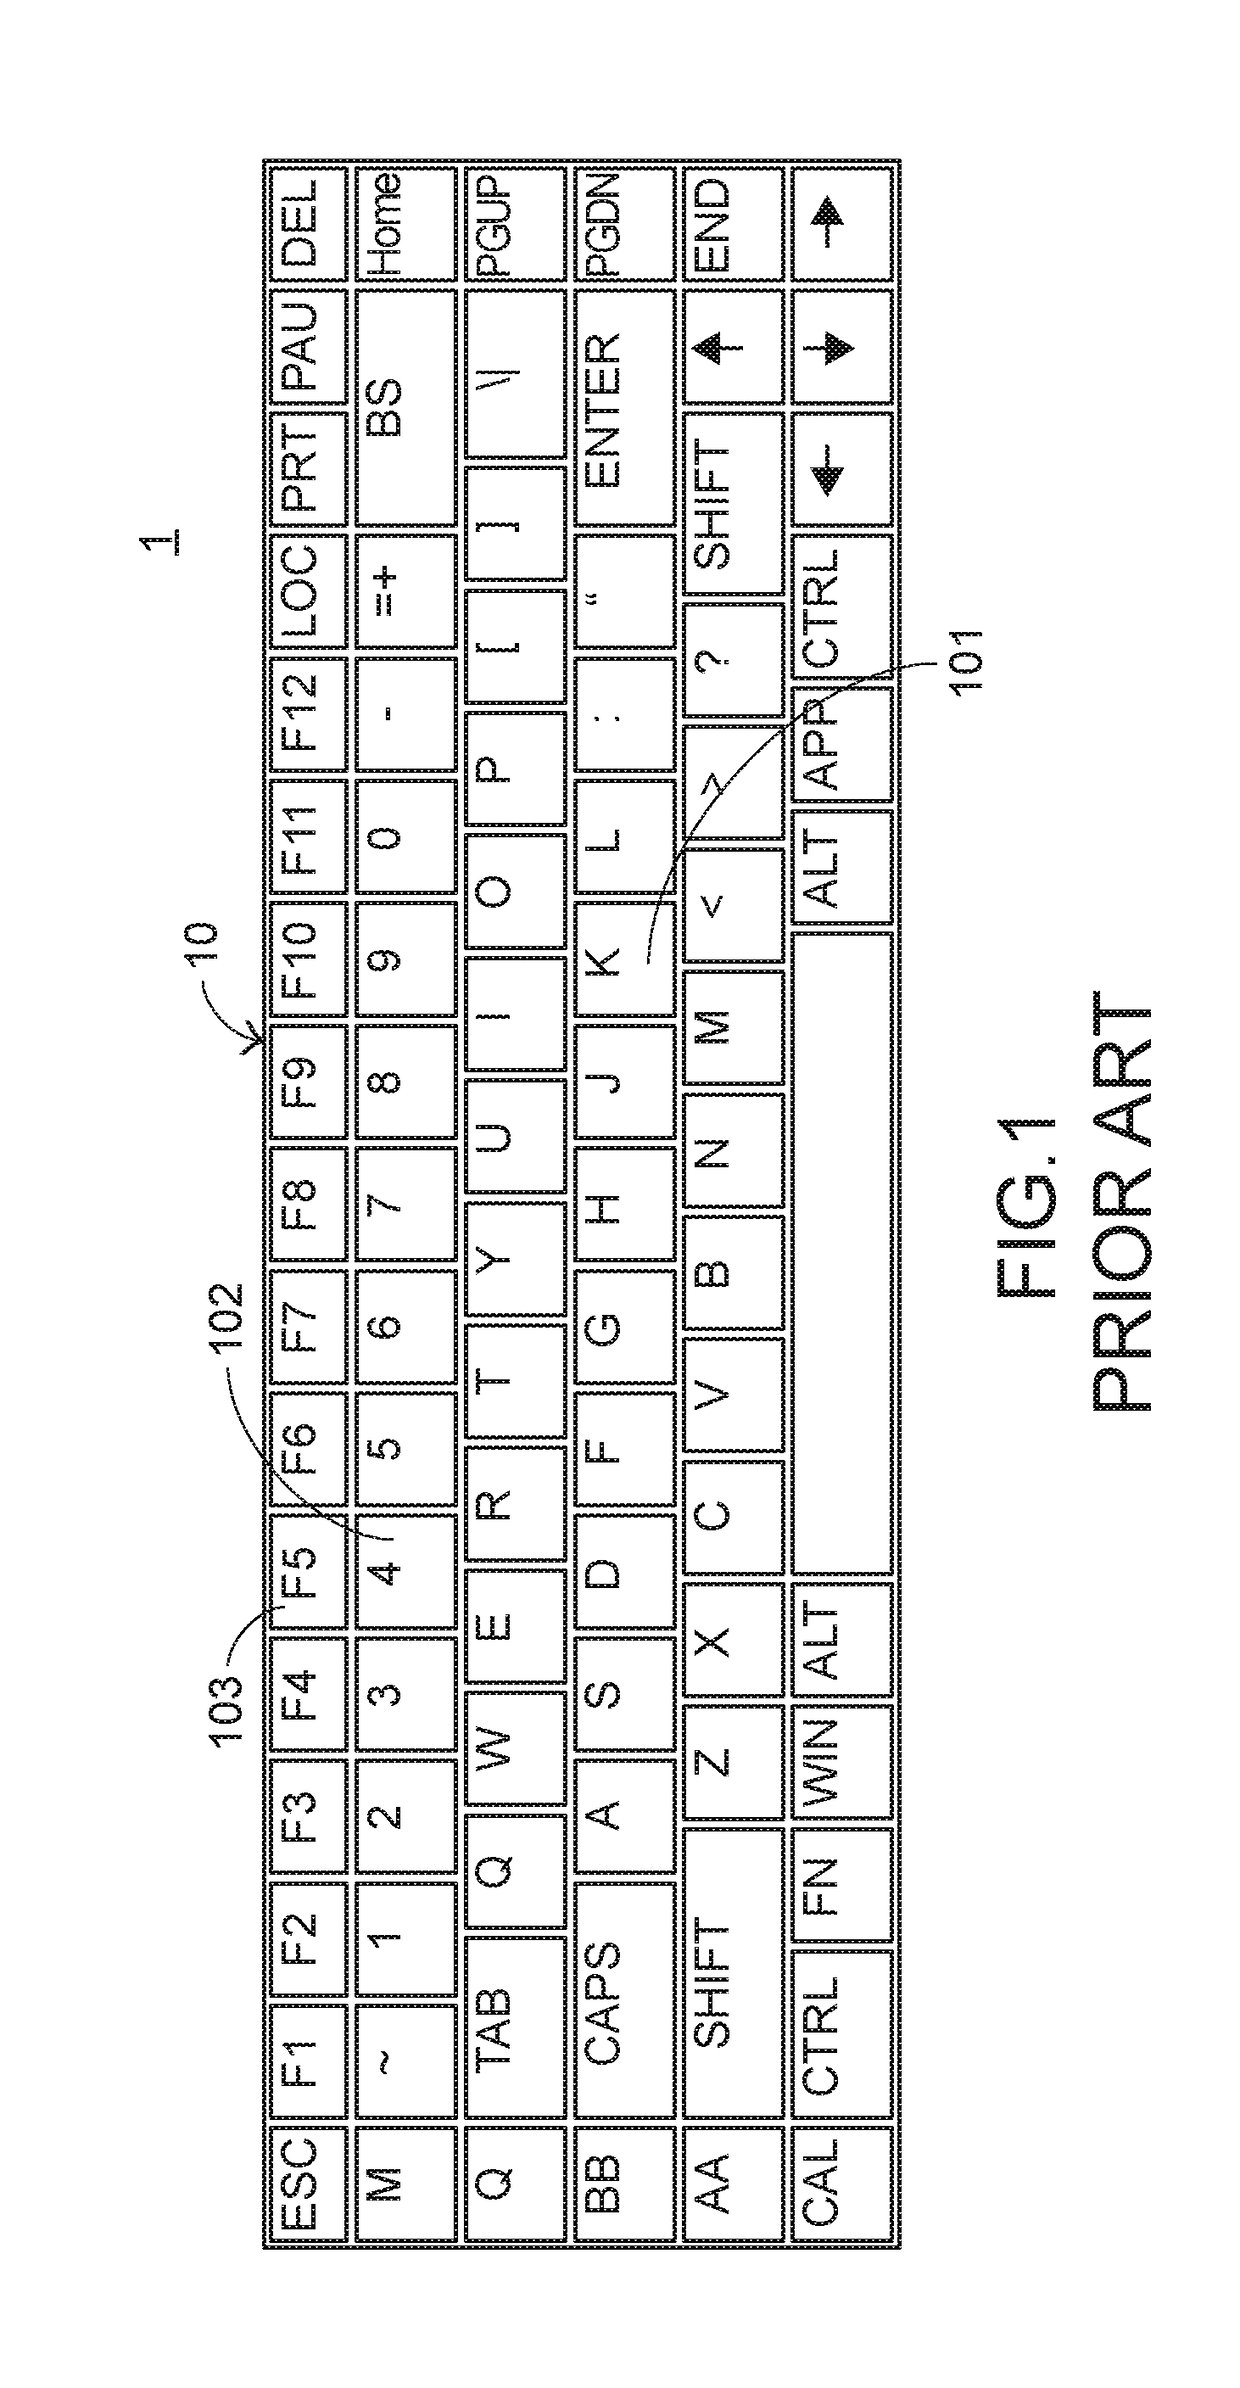 Luminous keyboard